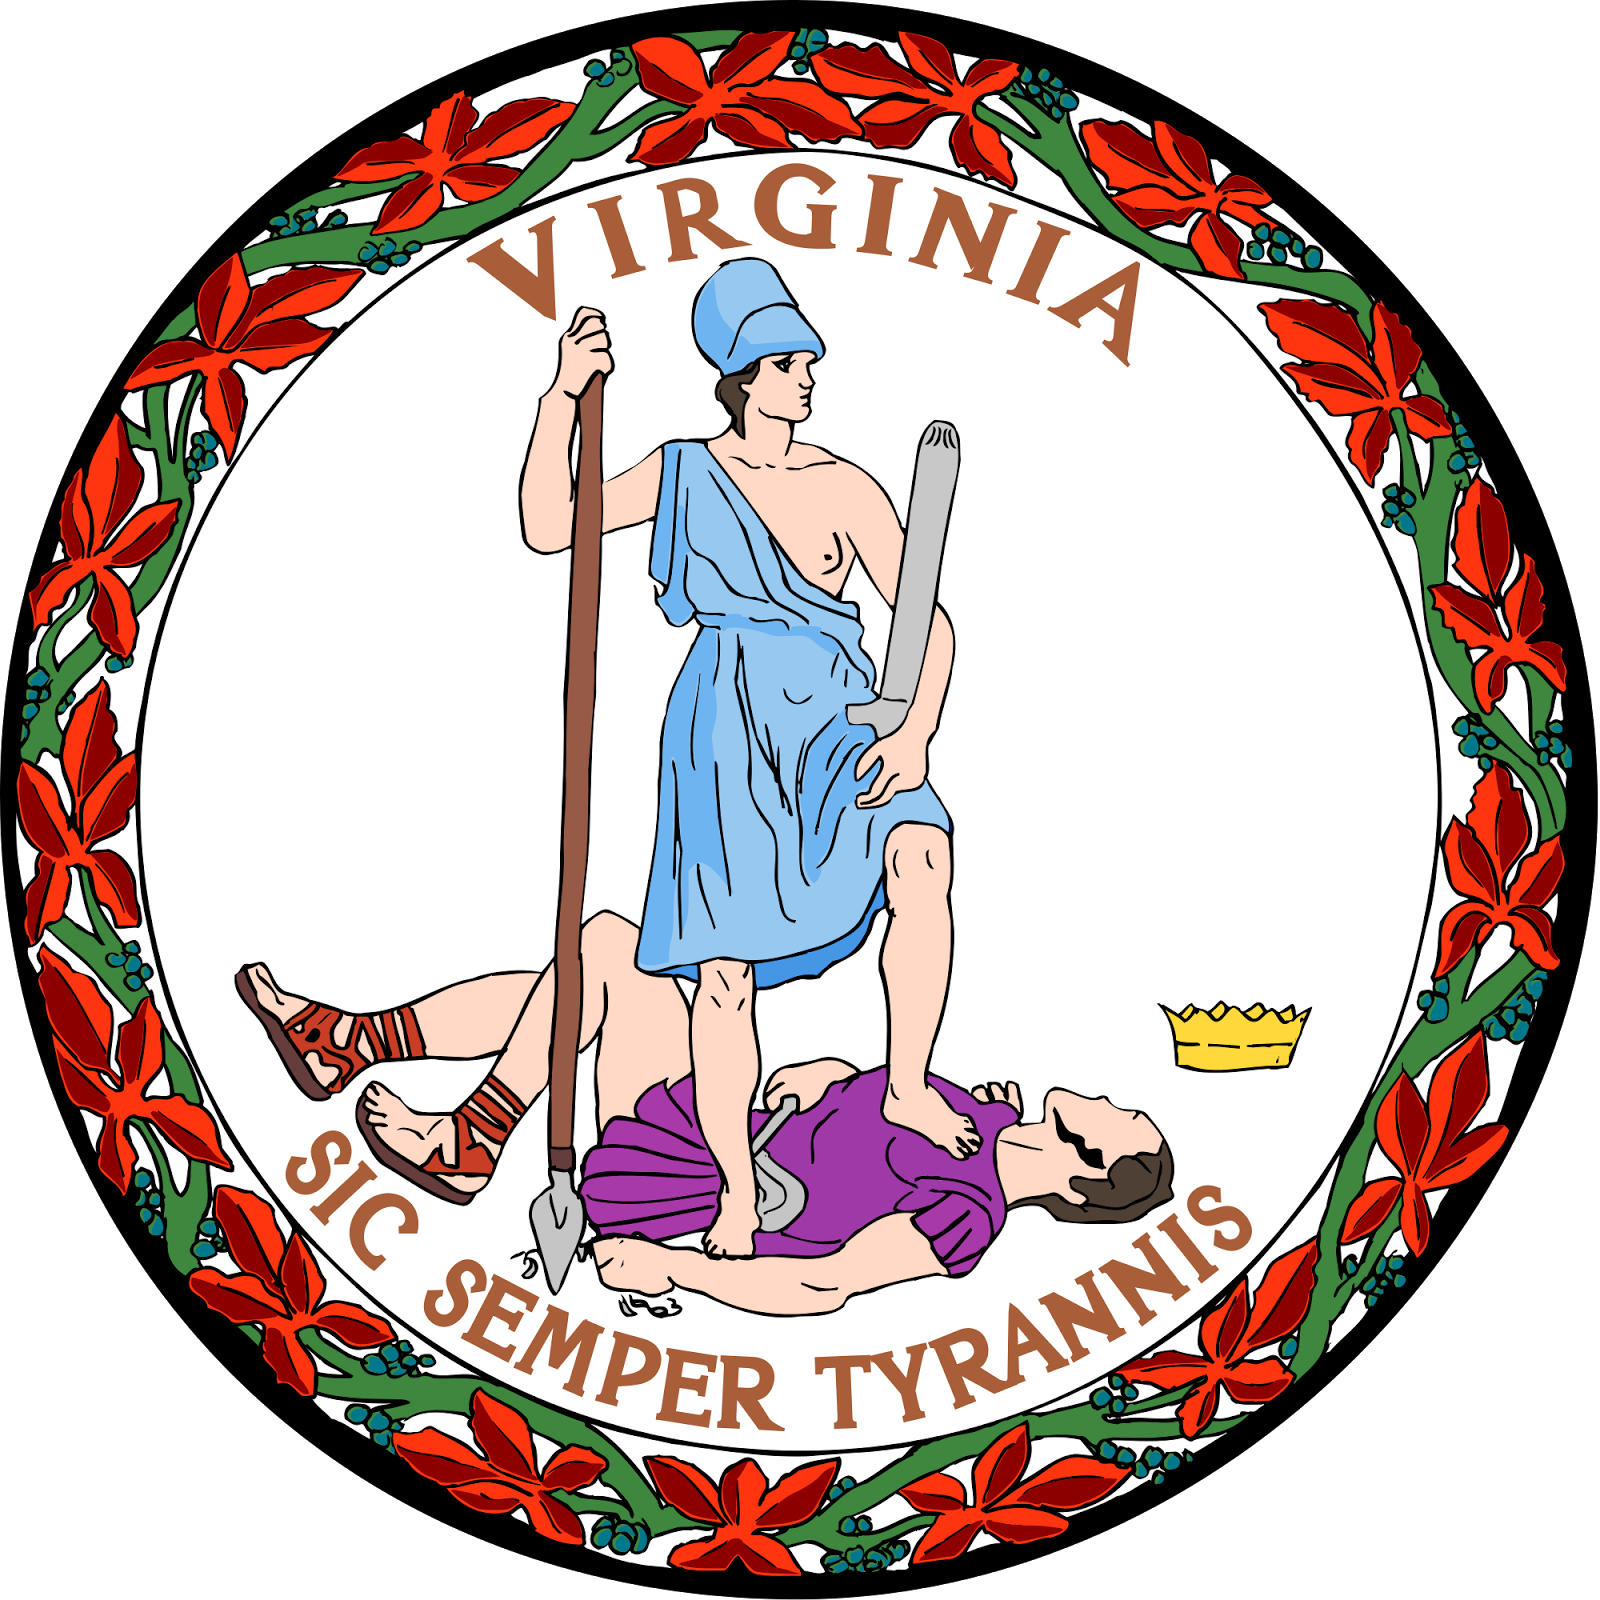 Virgina - Original Virginia State Seal (1600x1600)